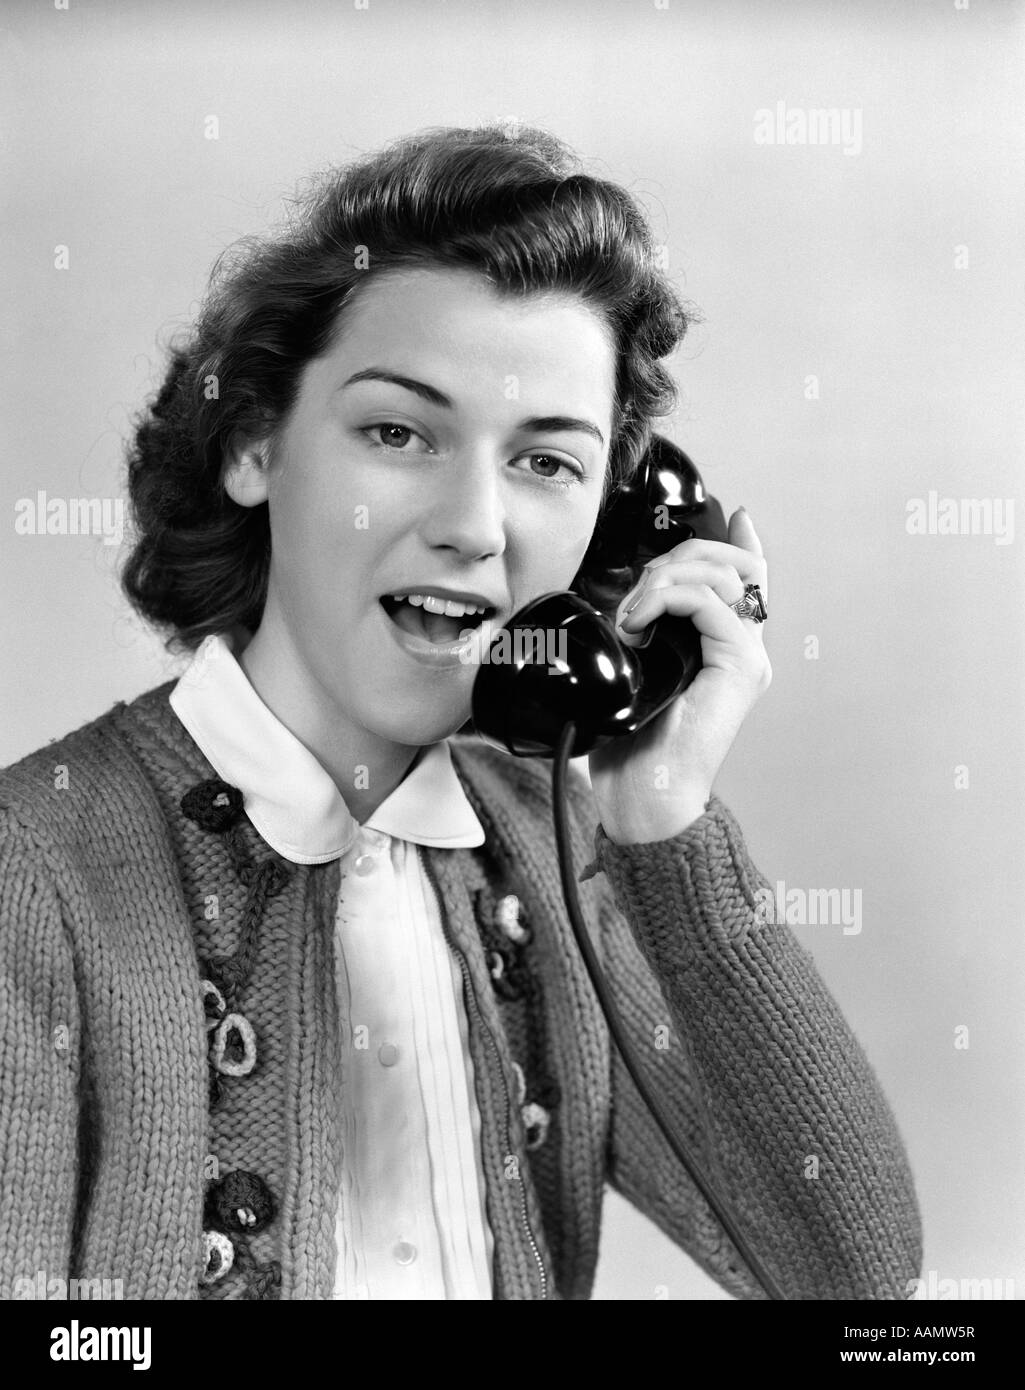 1940S 1950S JUNGE FRAU AM TELEFON Stockfoto